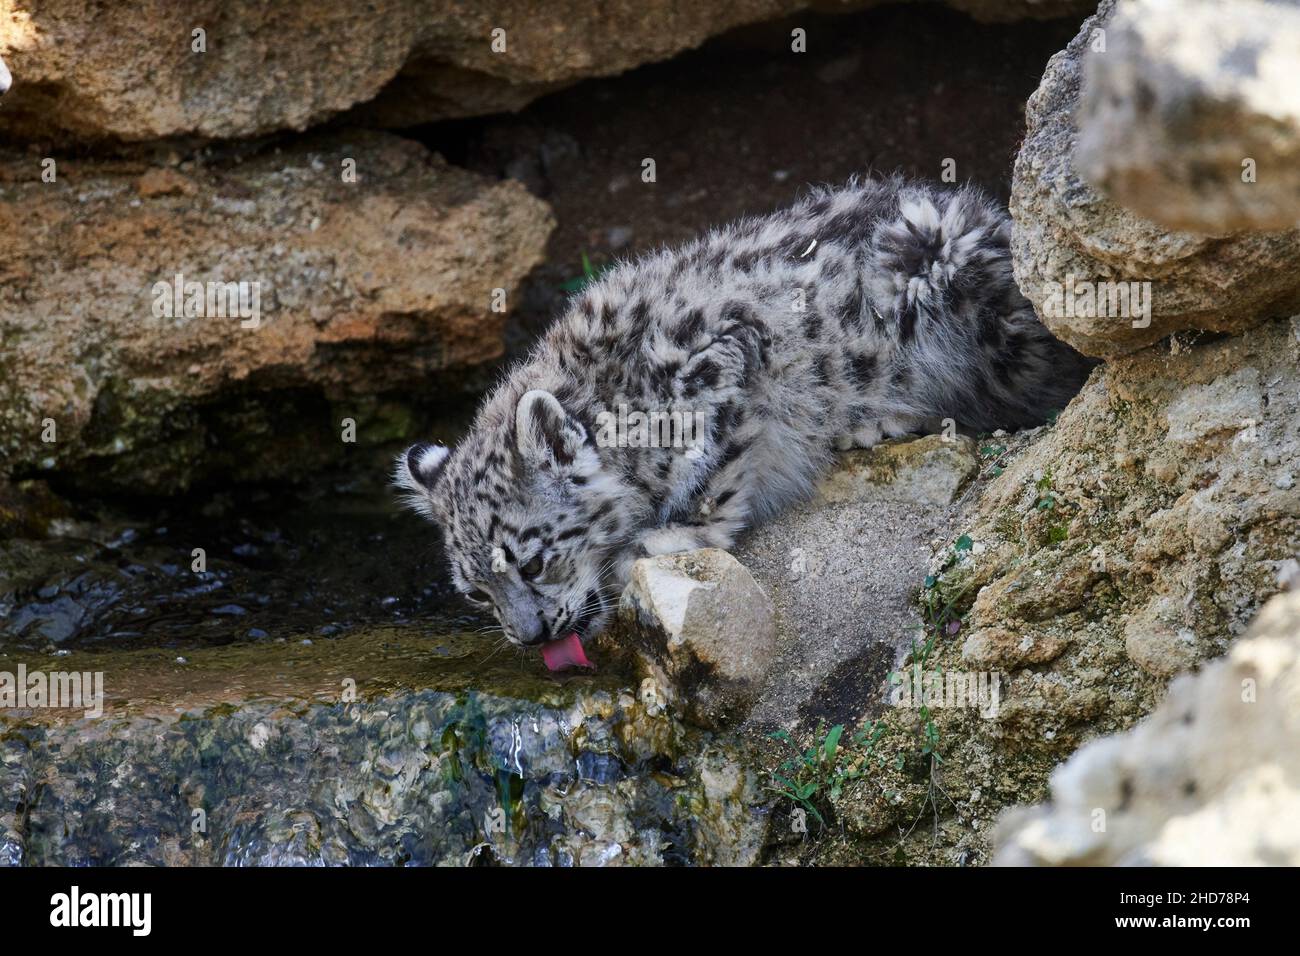 snow leopard (Panthera uncia) bambino 3 mesi bere, prigioniero. Bioparc Doué la Fontaine, Francia. Foto Stock